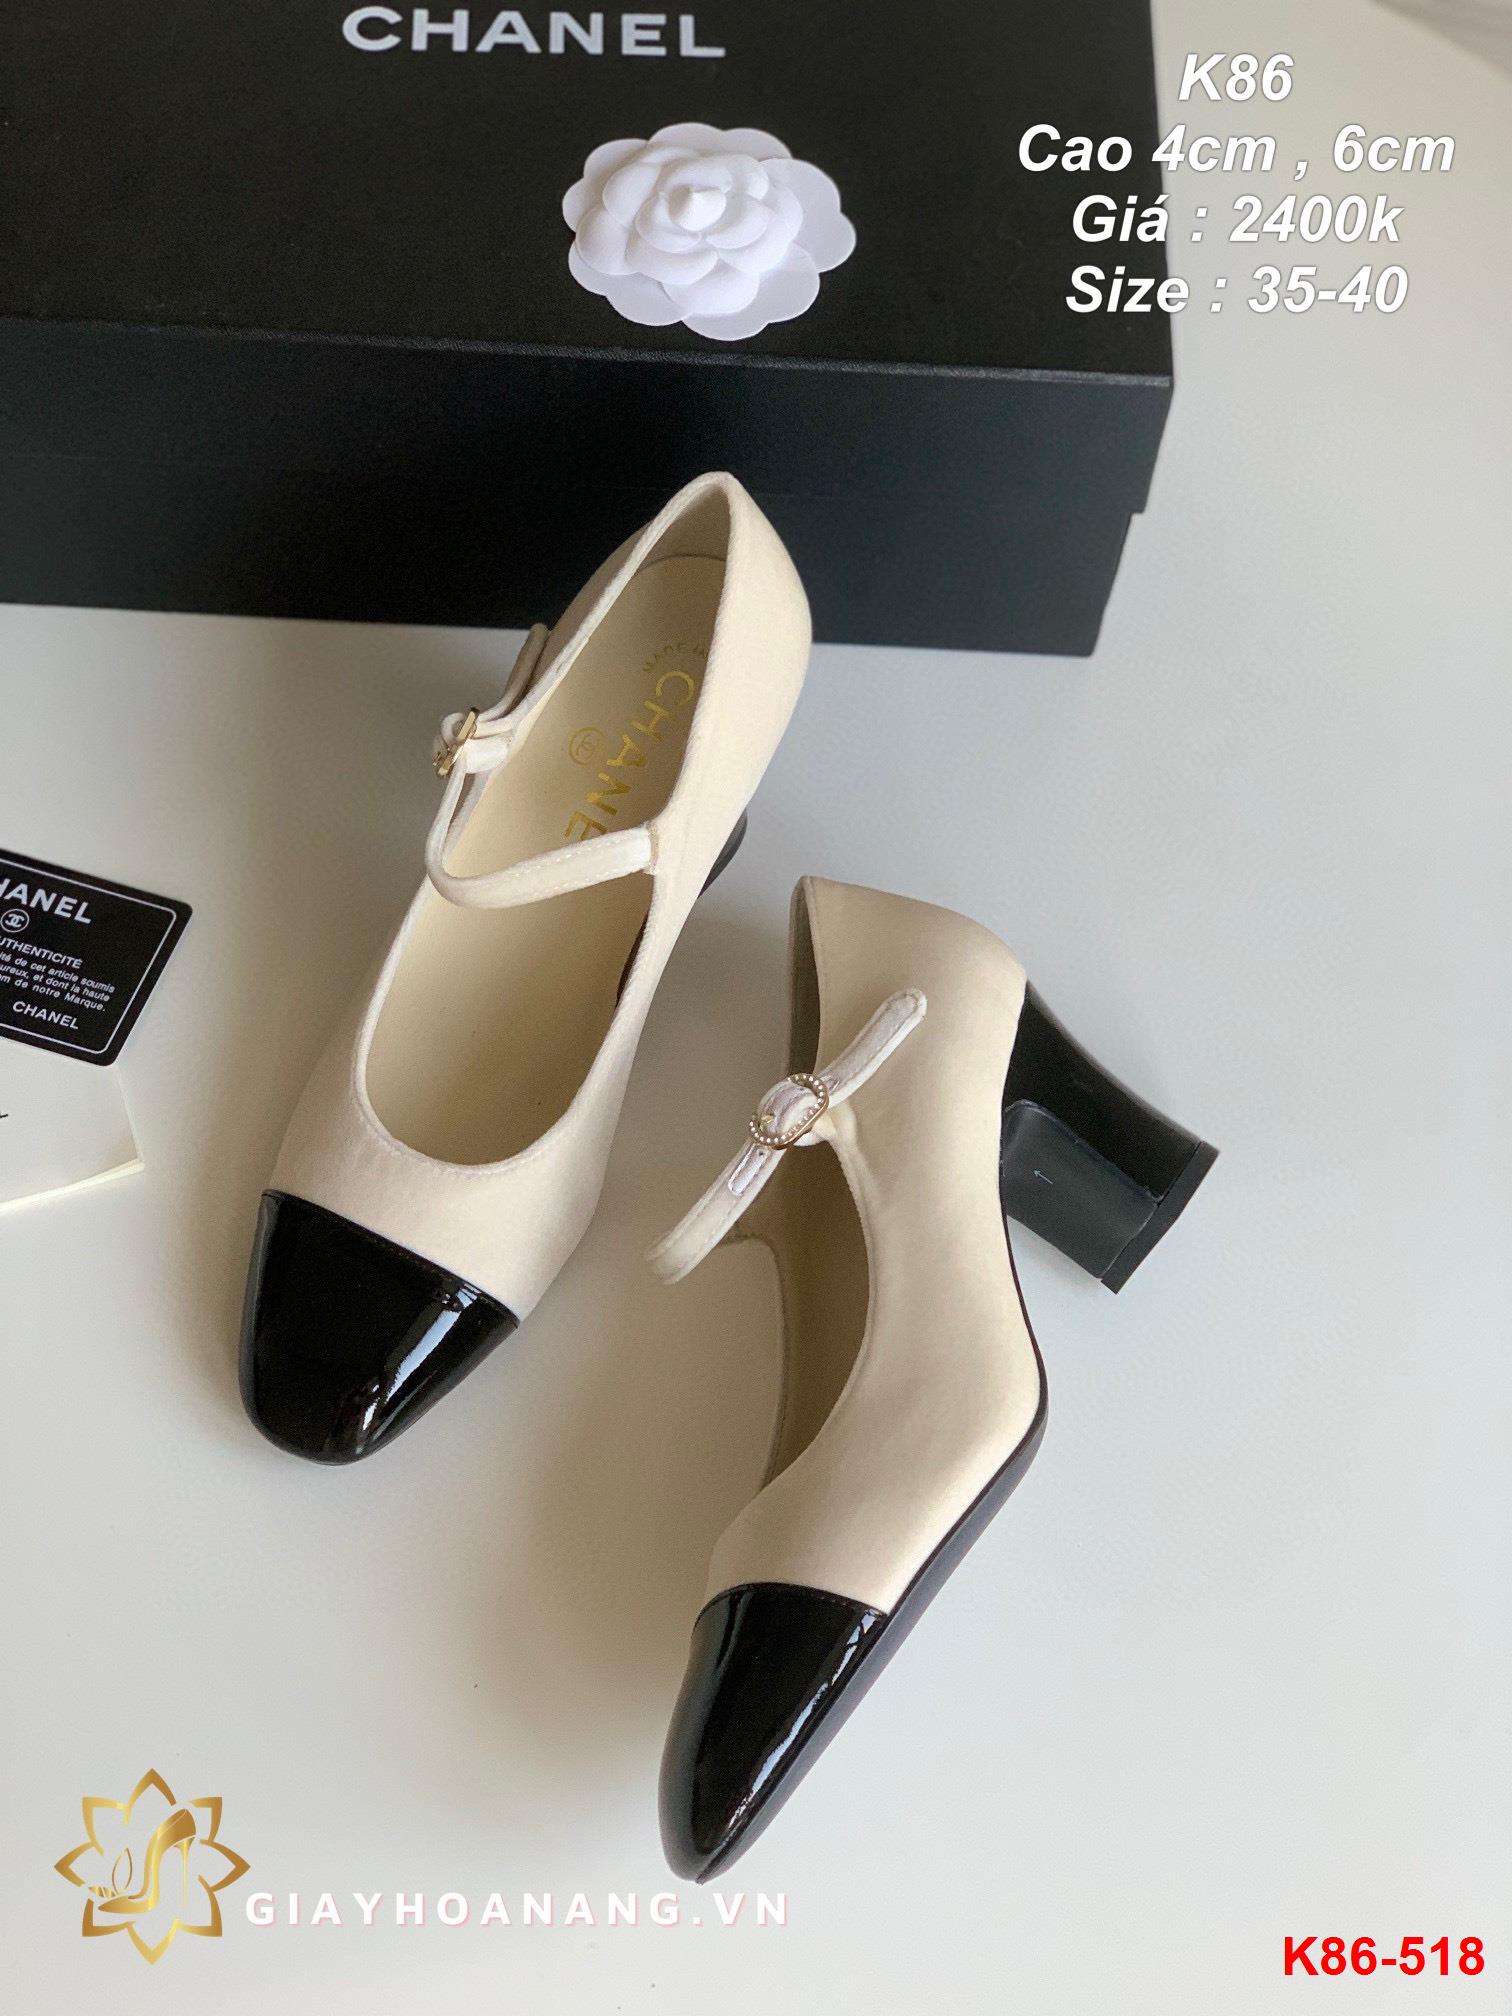 K86-518 Chanel giày cao 4cm , 6cm siêu cấp